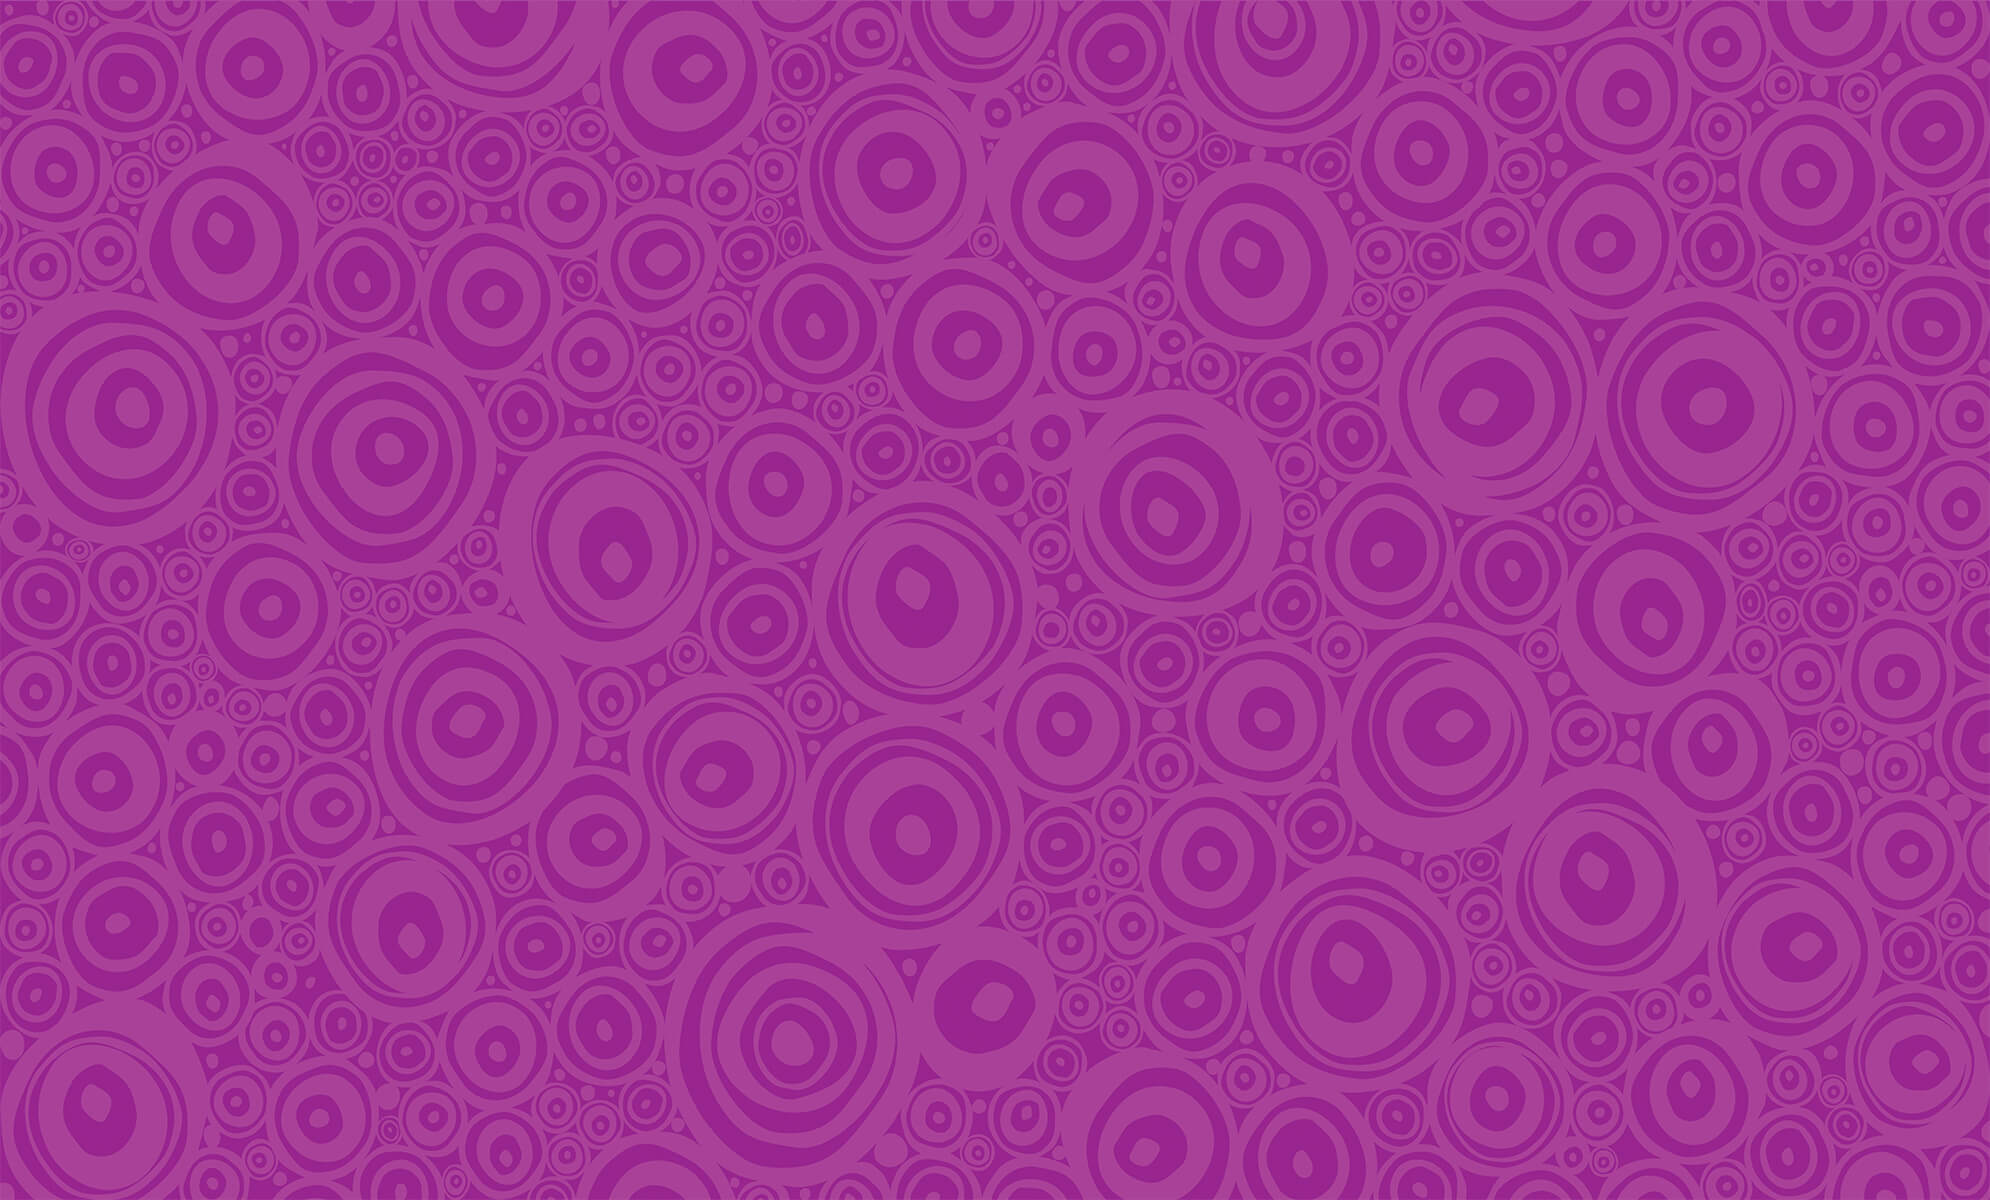 Background circles - light purple